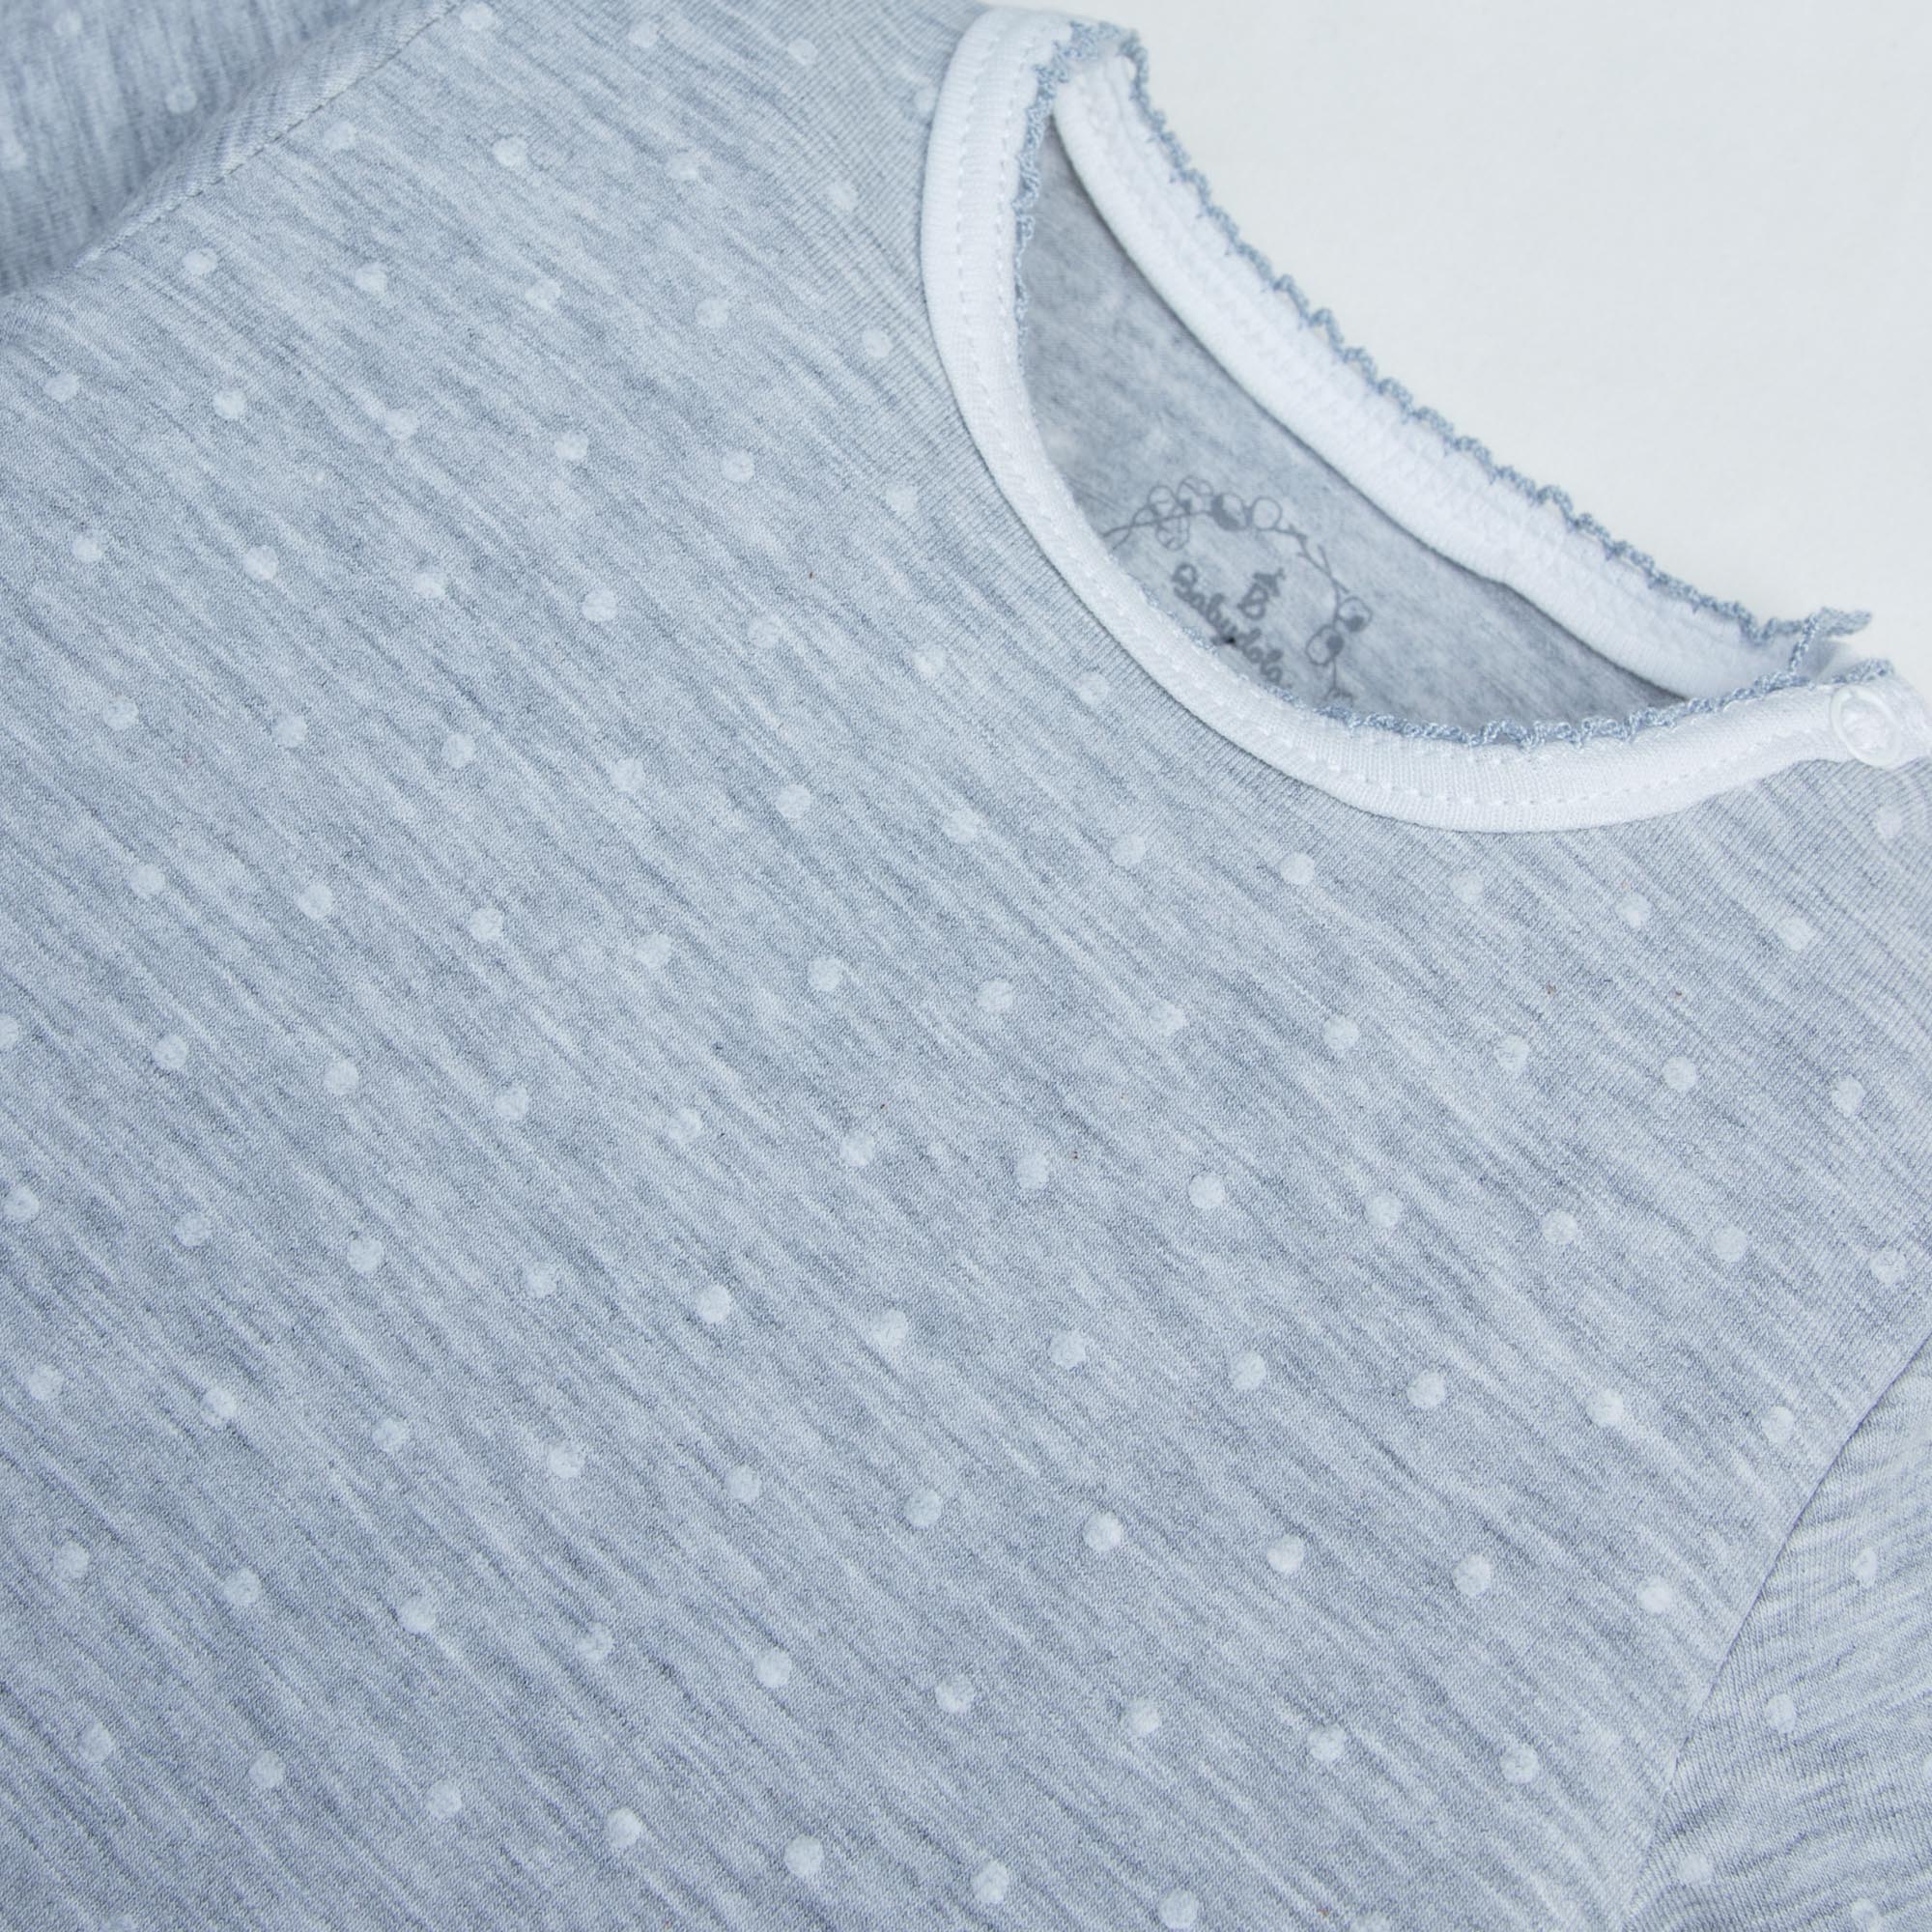 Baby Grey Printed Bodysuit